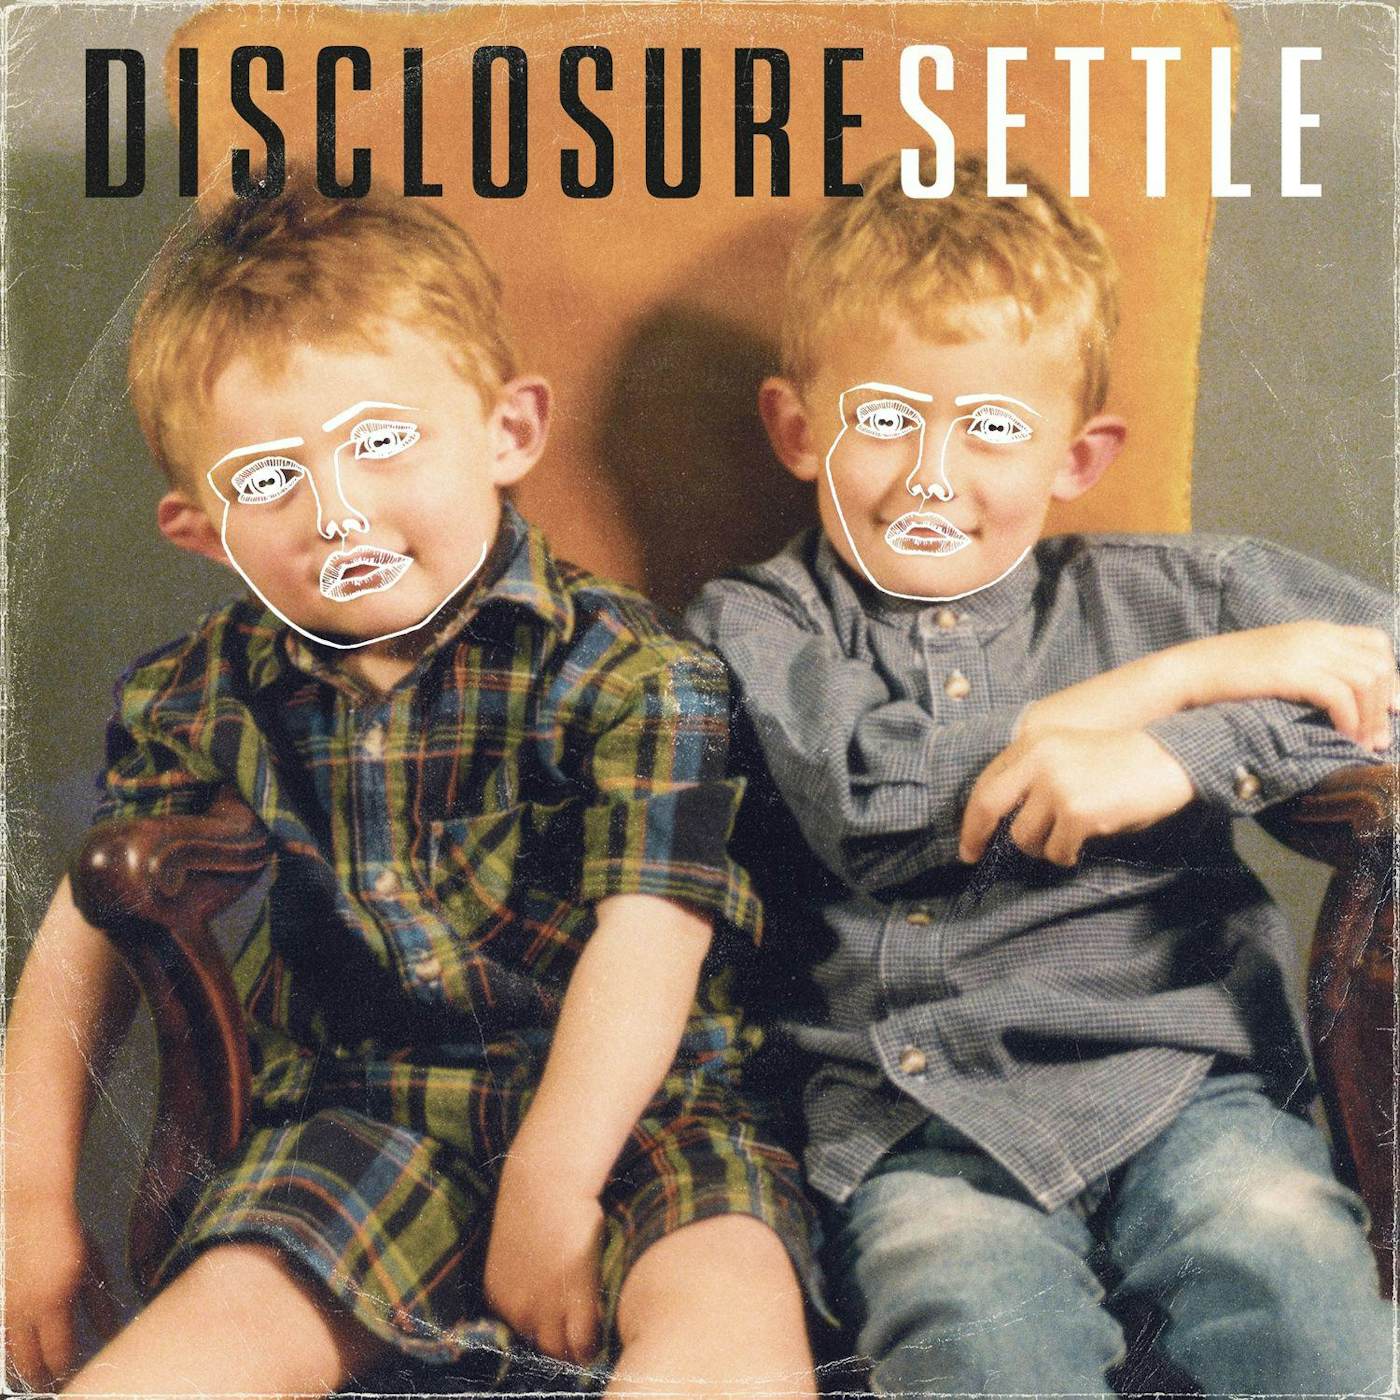 Disclosure Settle Vinyl Record